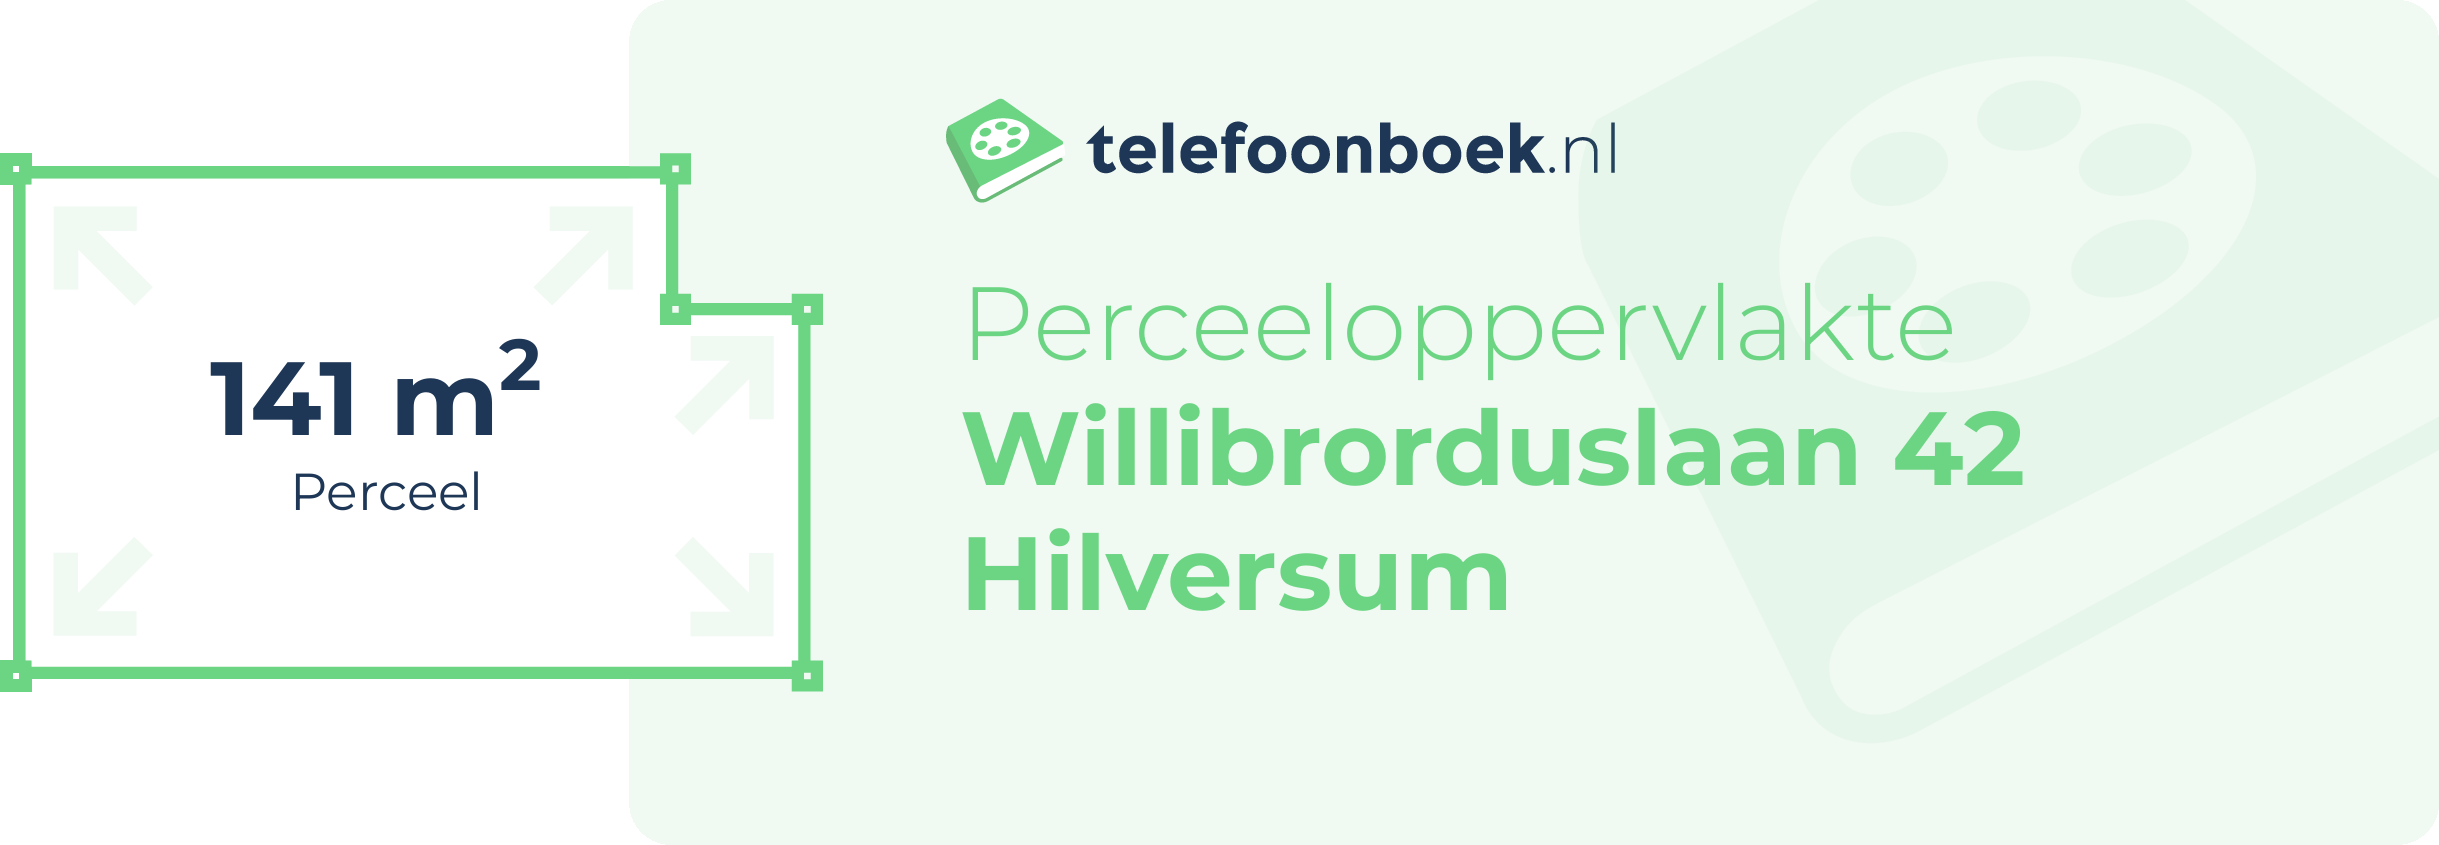 Perceeloppervlakte Willibrorduslaan 42 Hilversum